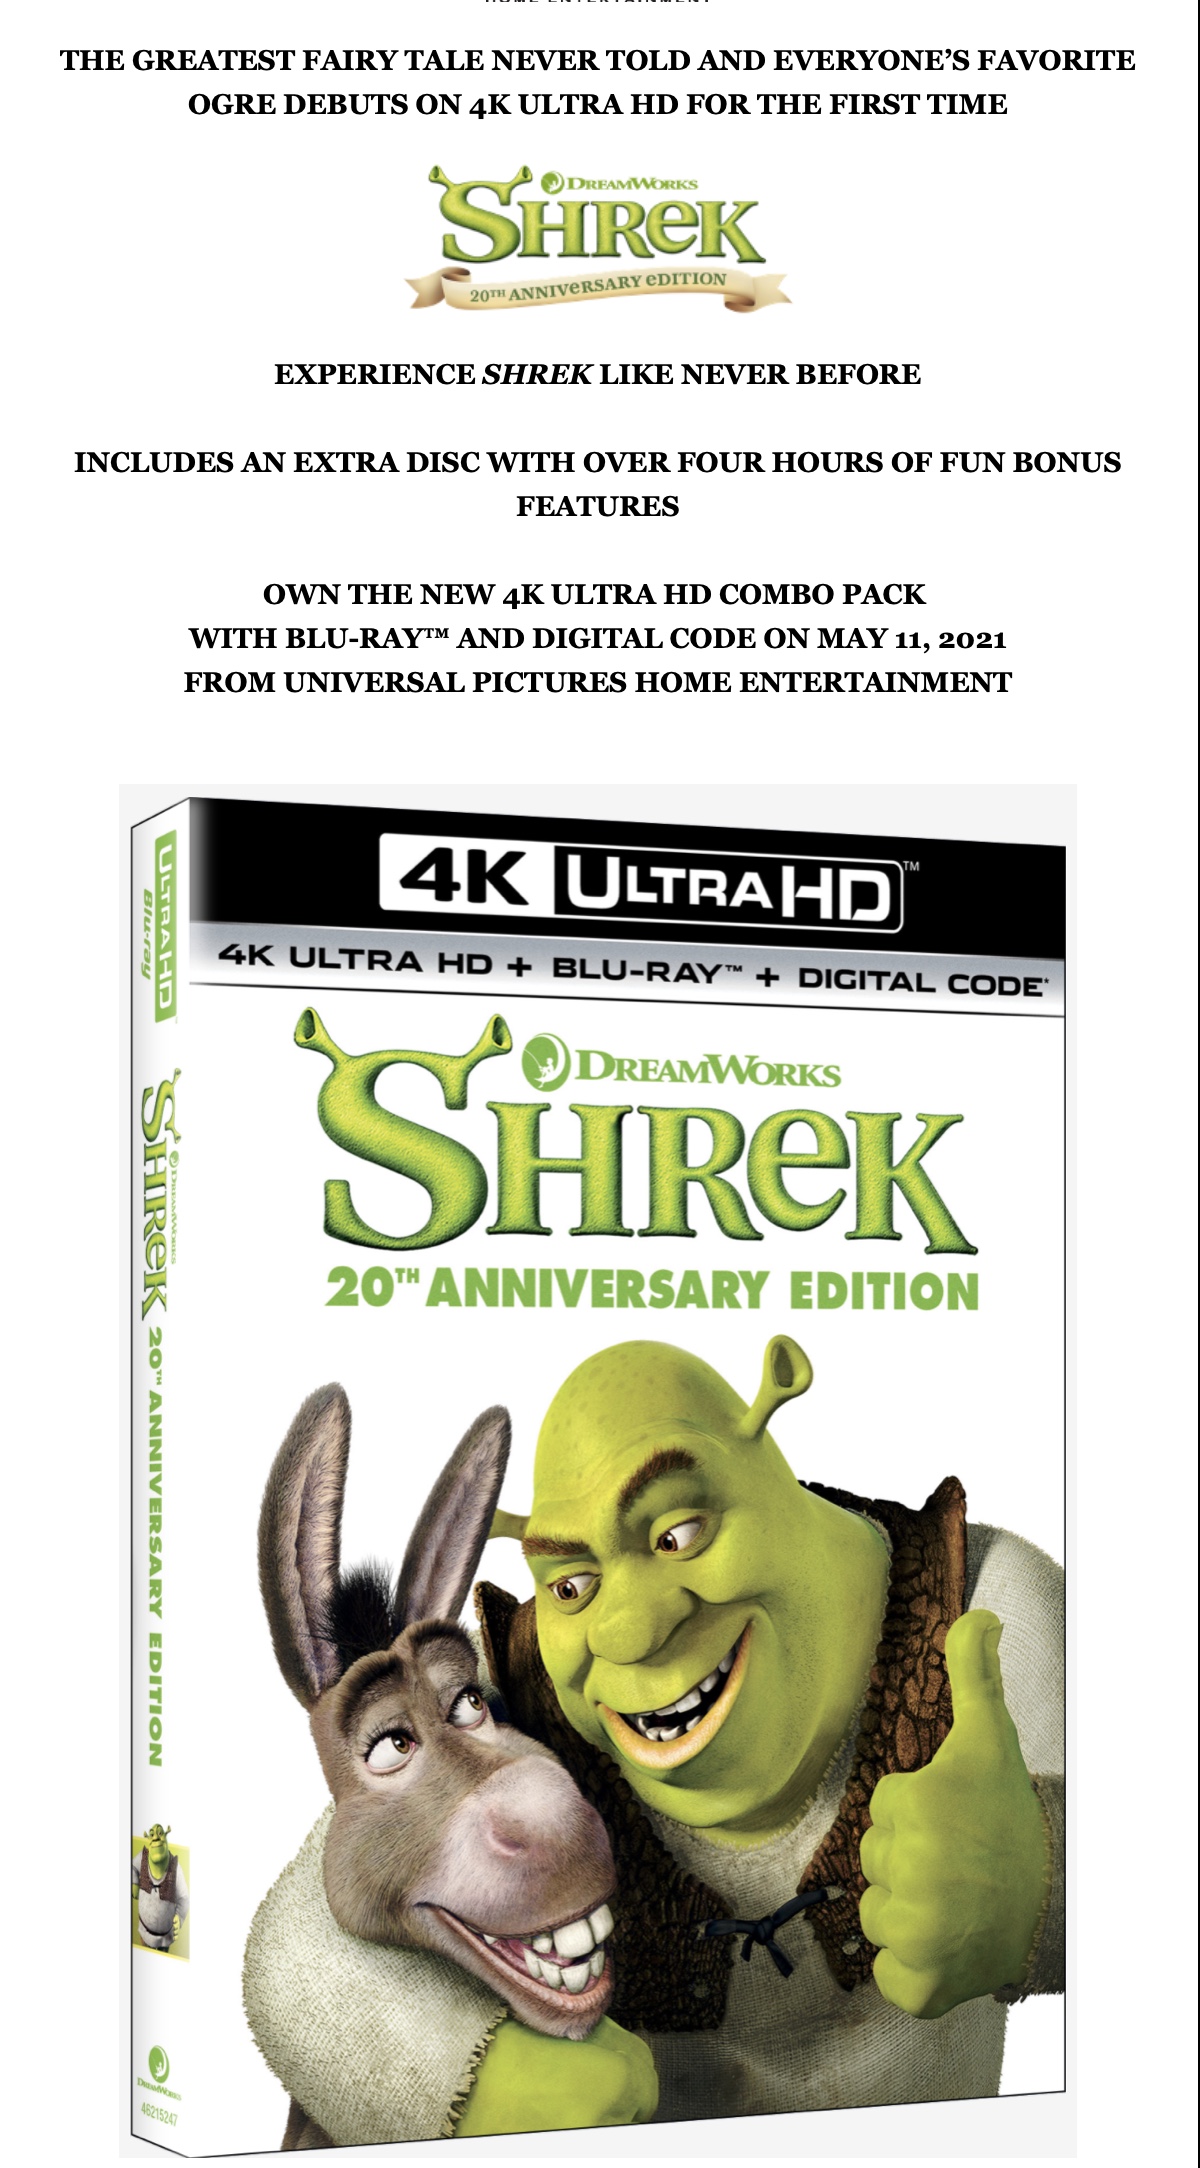 Press Release - USHE Press Release: Shrek (2001) (Blu-ray) (4k UHD) 20th  Anniversary Edition | Home Theater Forum